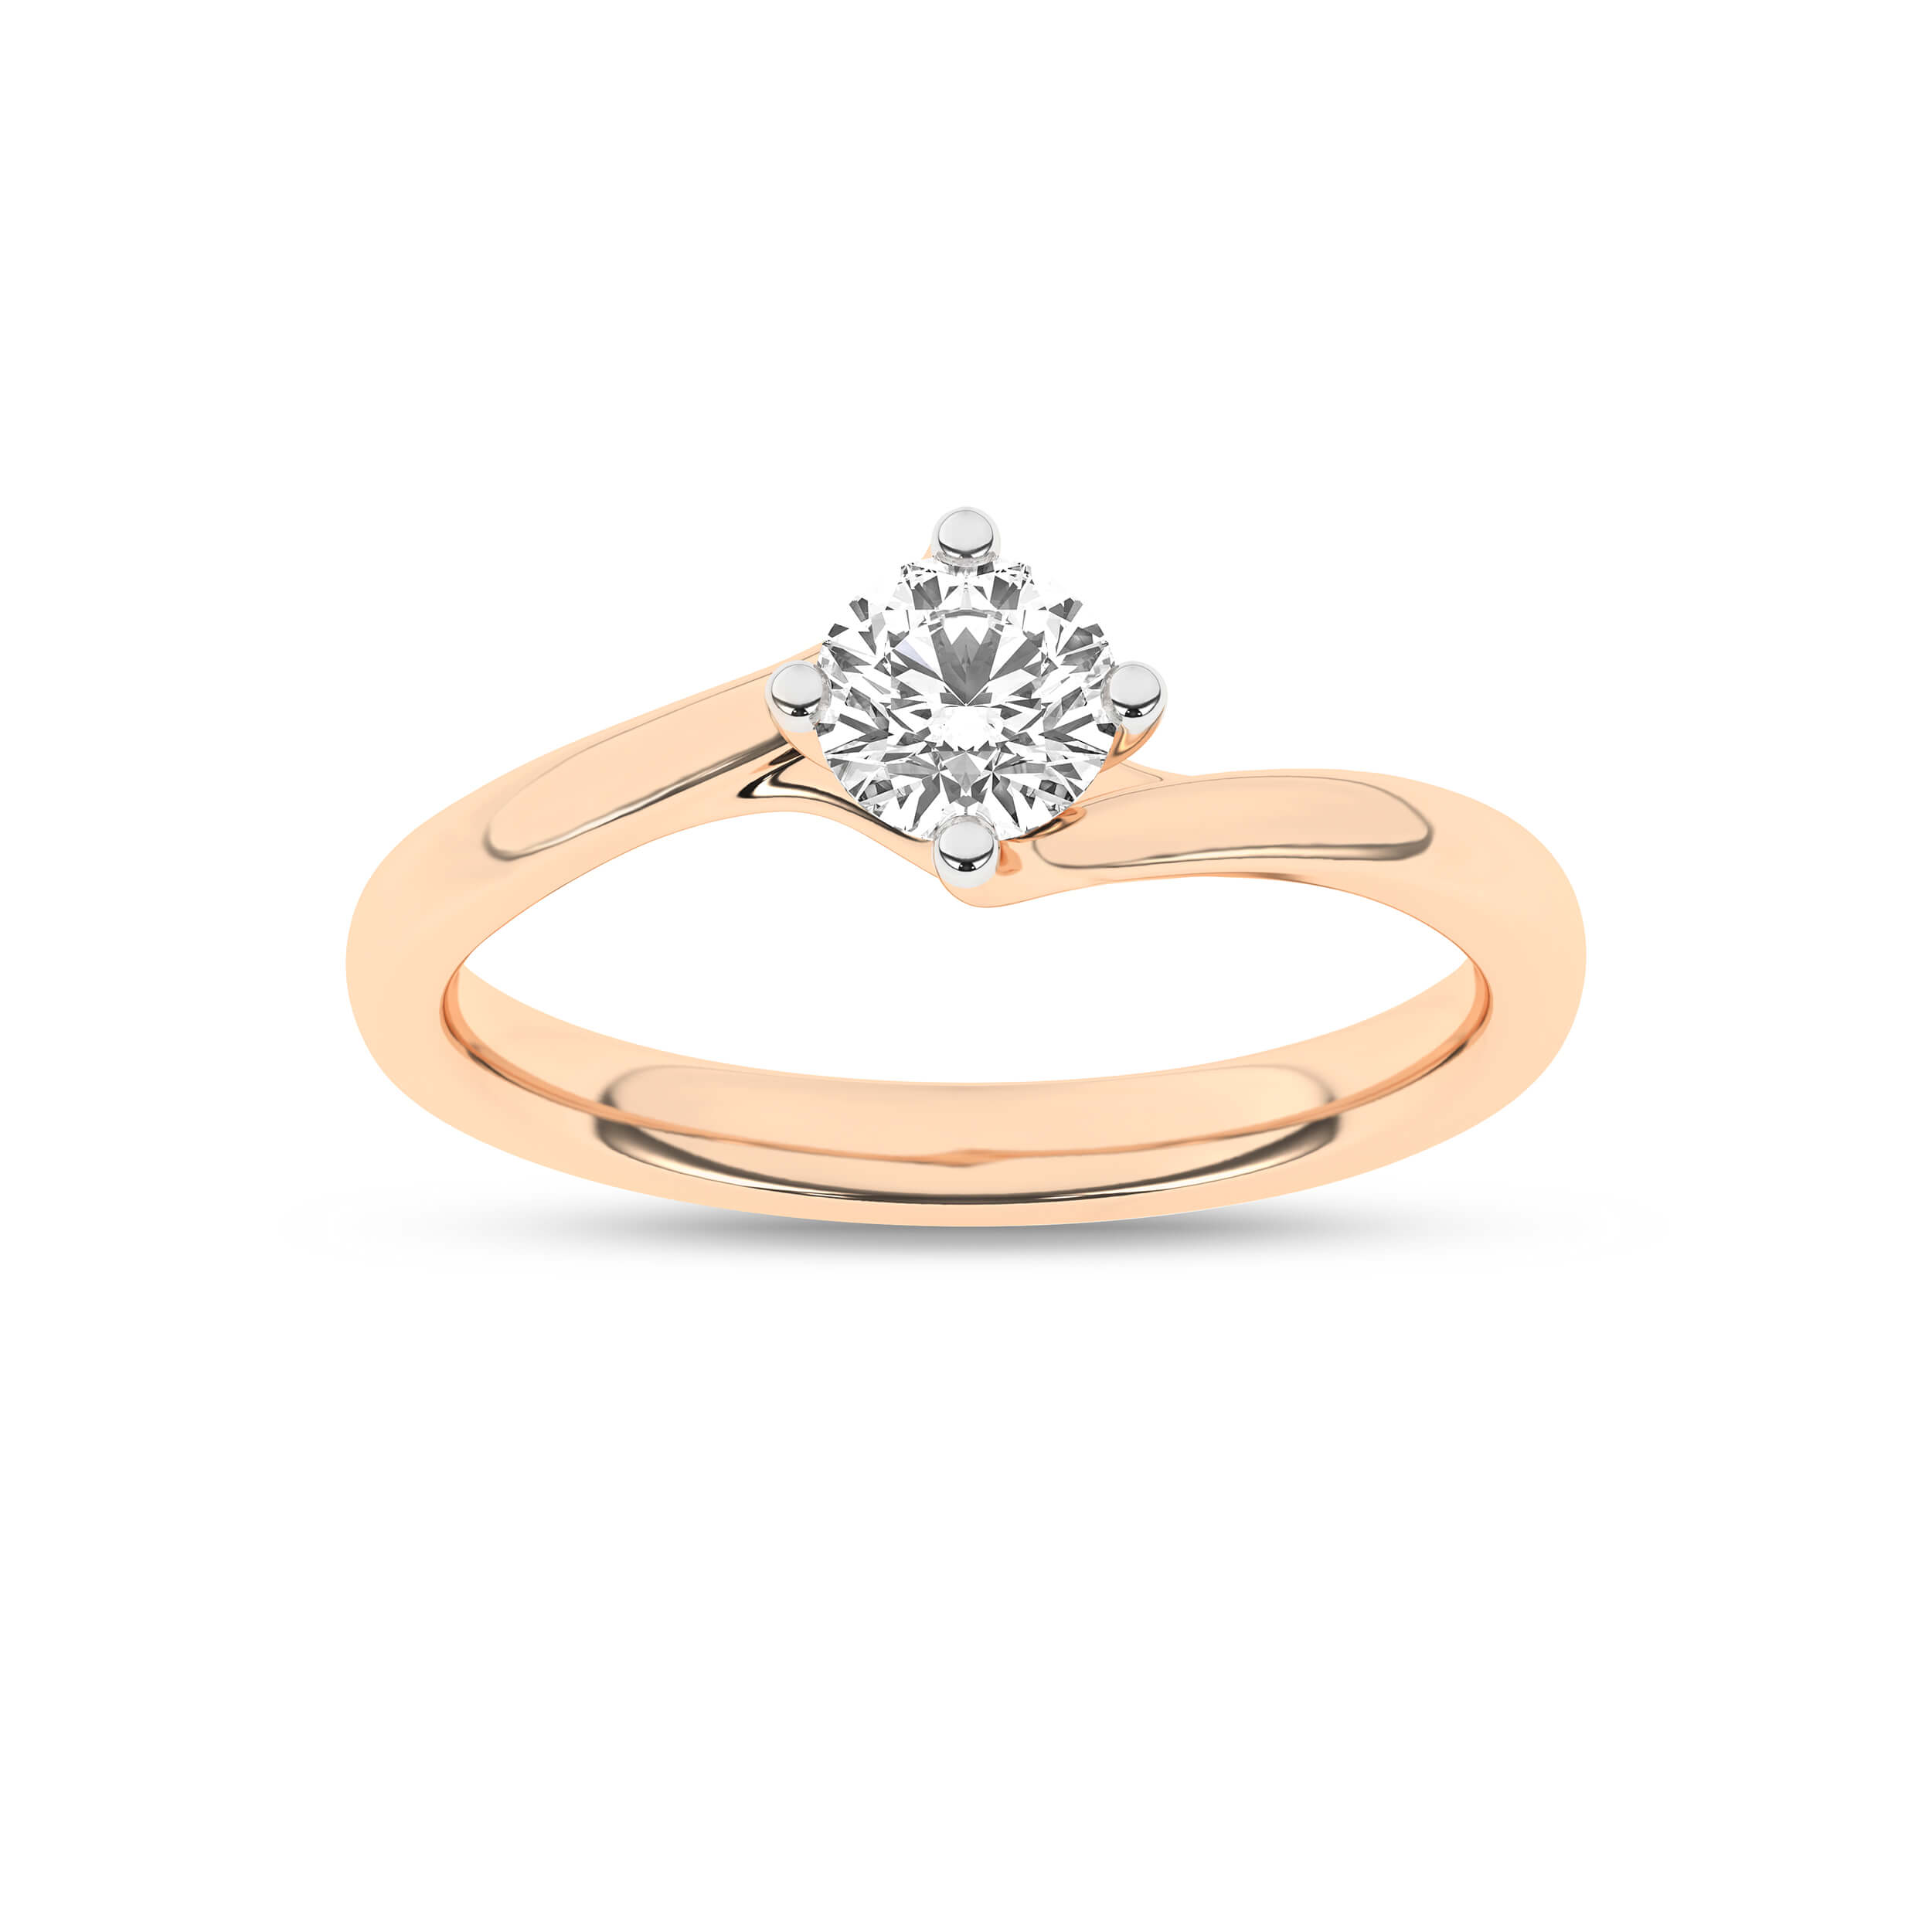 Inel de logodna din Aur Alb 14K cu Diamant 0.33Ct, articol RS1320, previzualizare foto 1